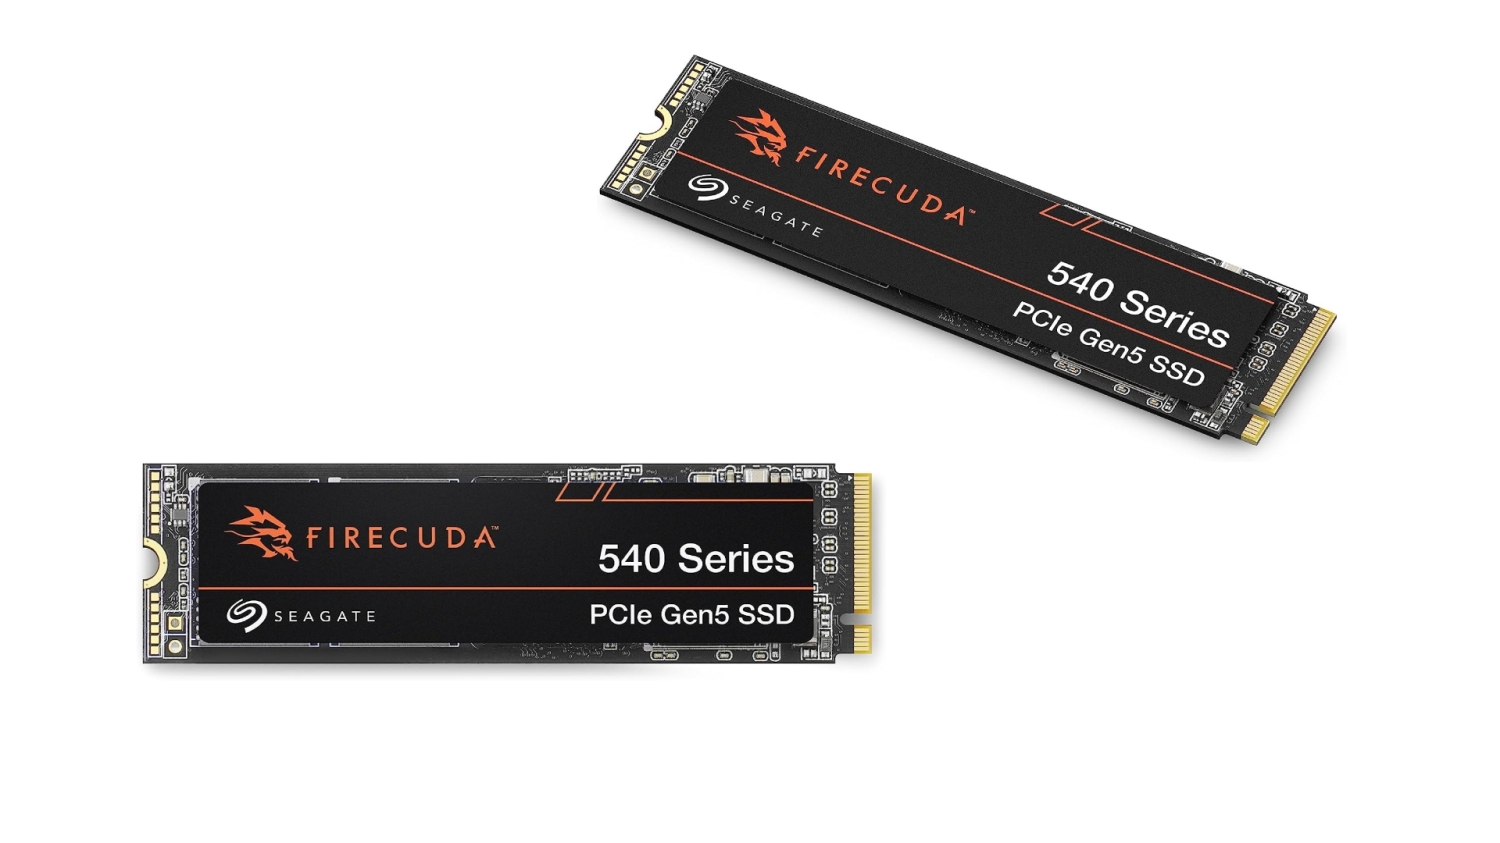 TweakTown Enlarged Image - Seagate FireCuda 540 PCIe Gen5 SSD, image credit: Amazon/Seagate.